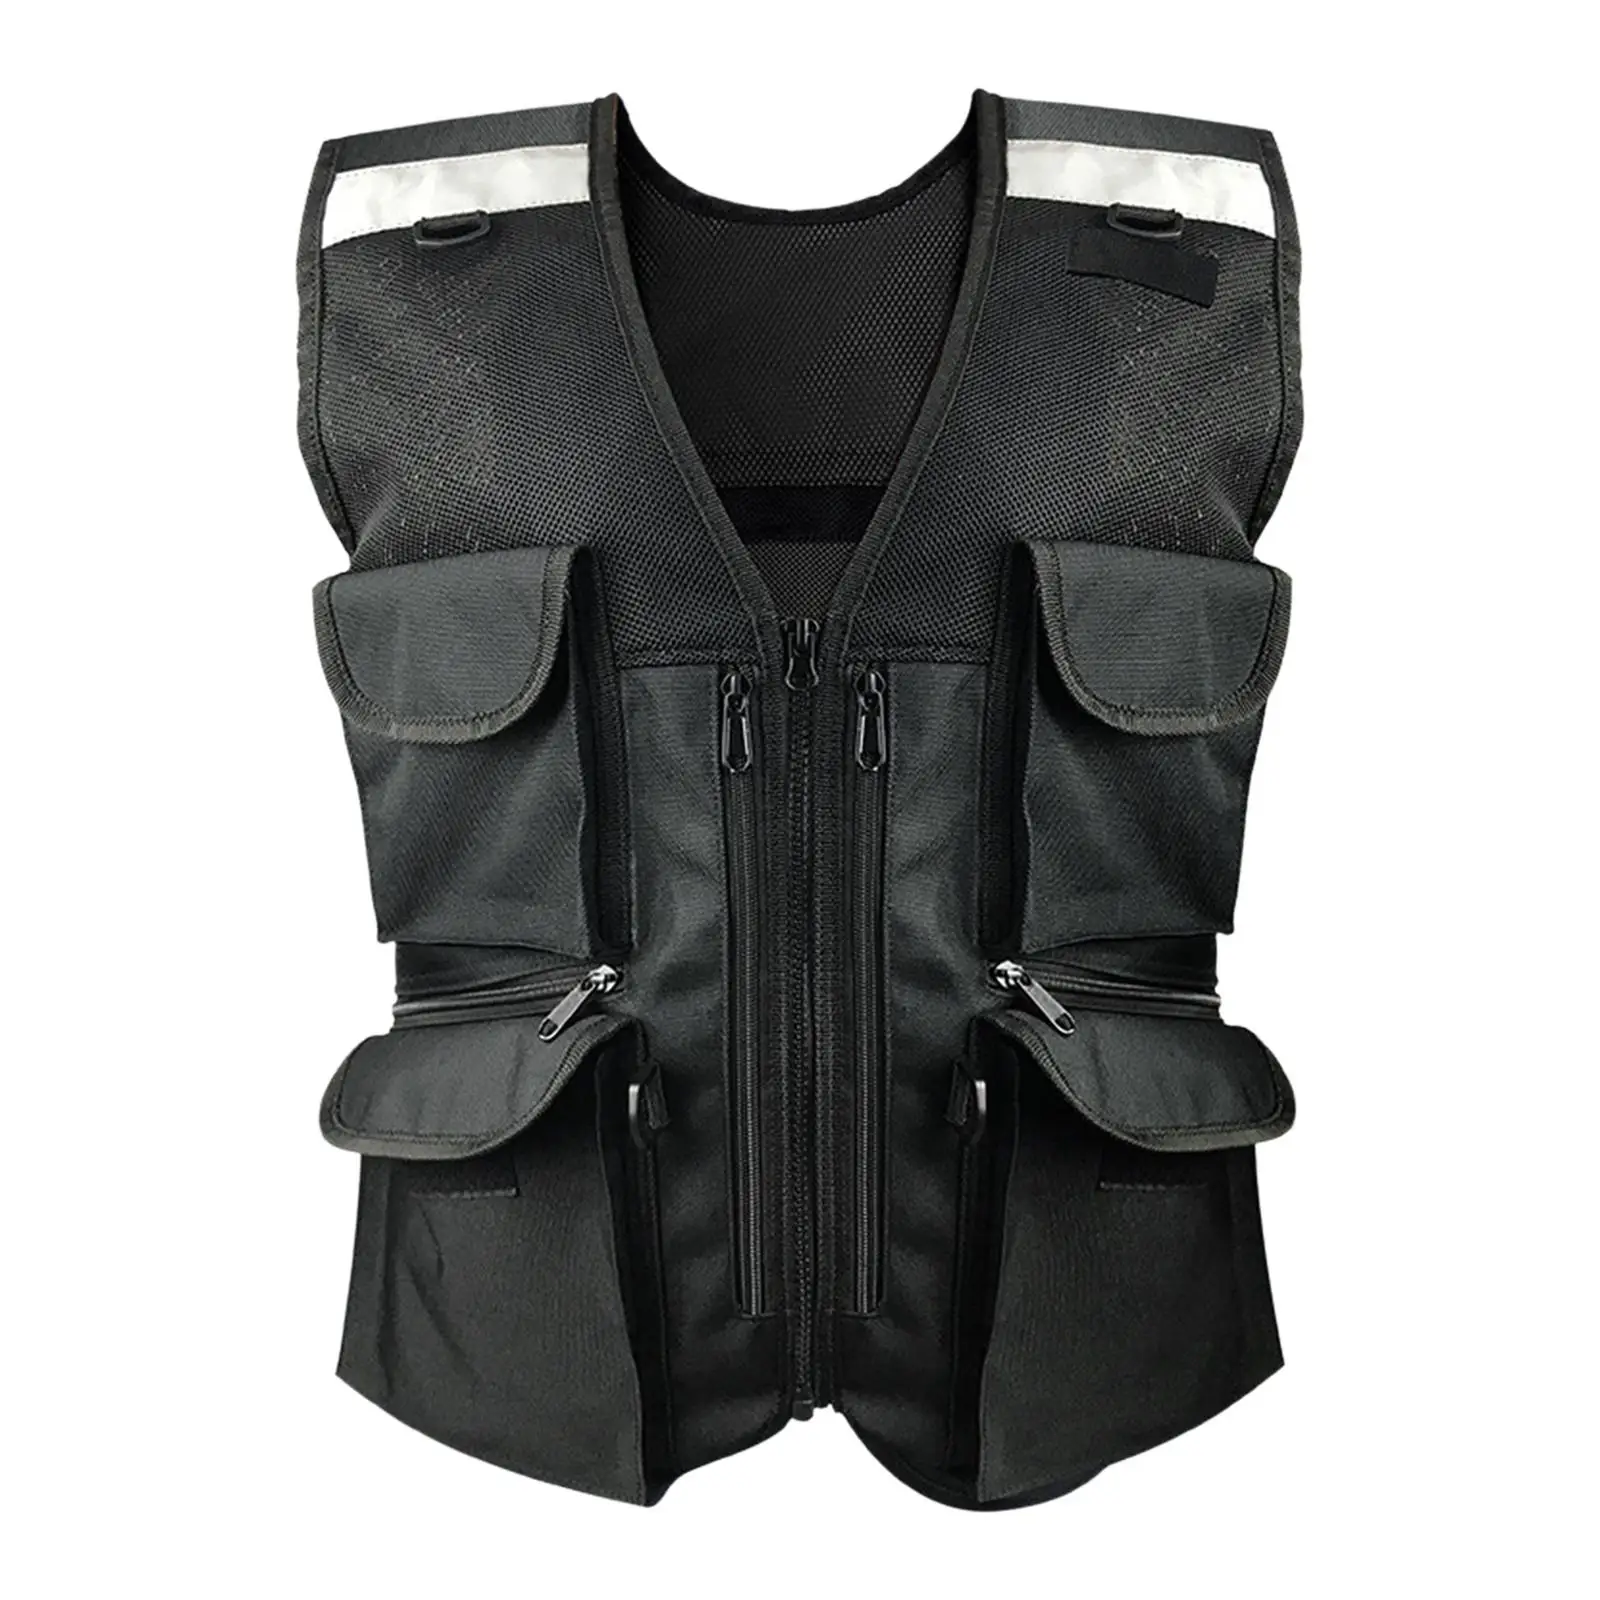 Reflective Safety Vest Multi Pockets Safety Clothing Zipper Front Construction Security Vest for Biking Night